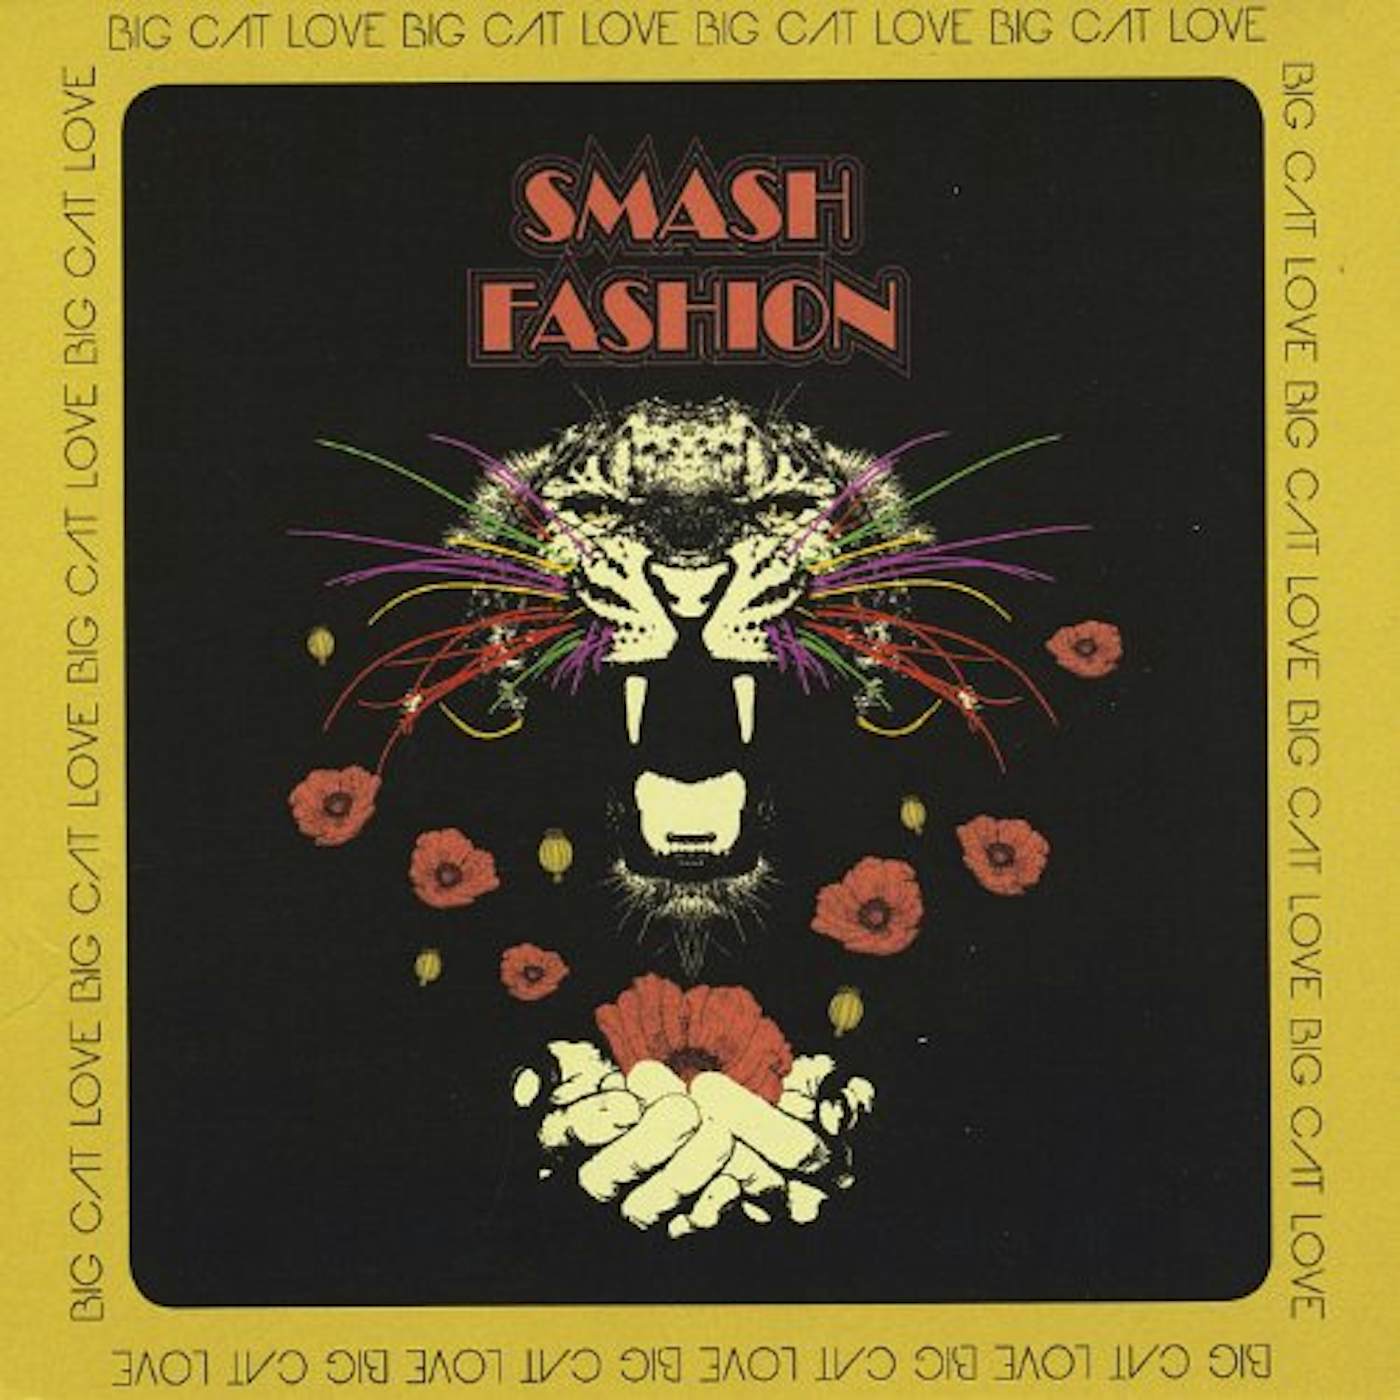 Smash Fashion BIG CAT LOVE CD